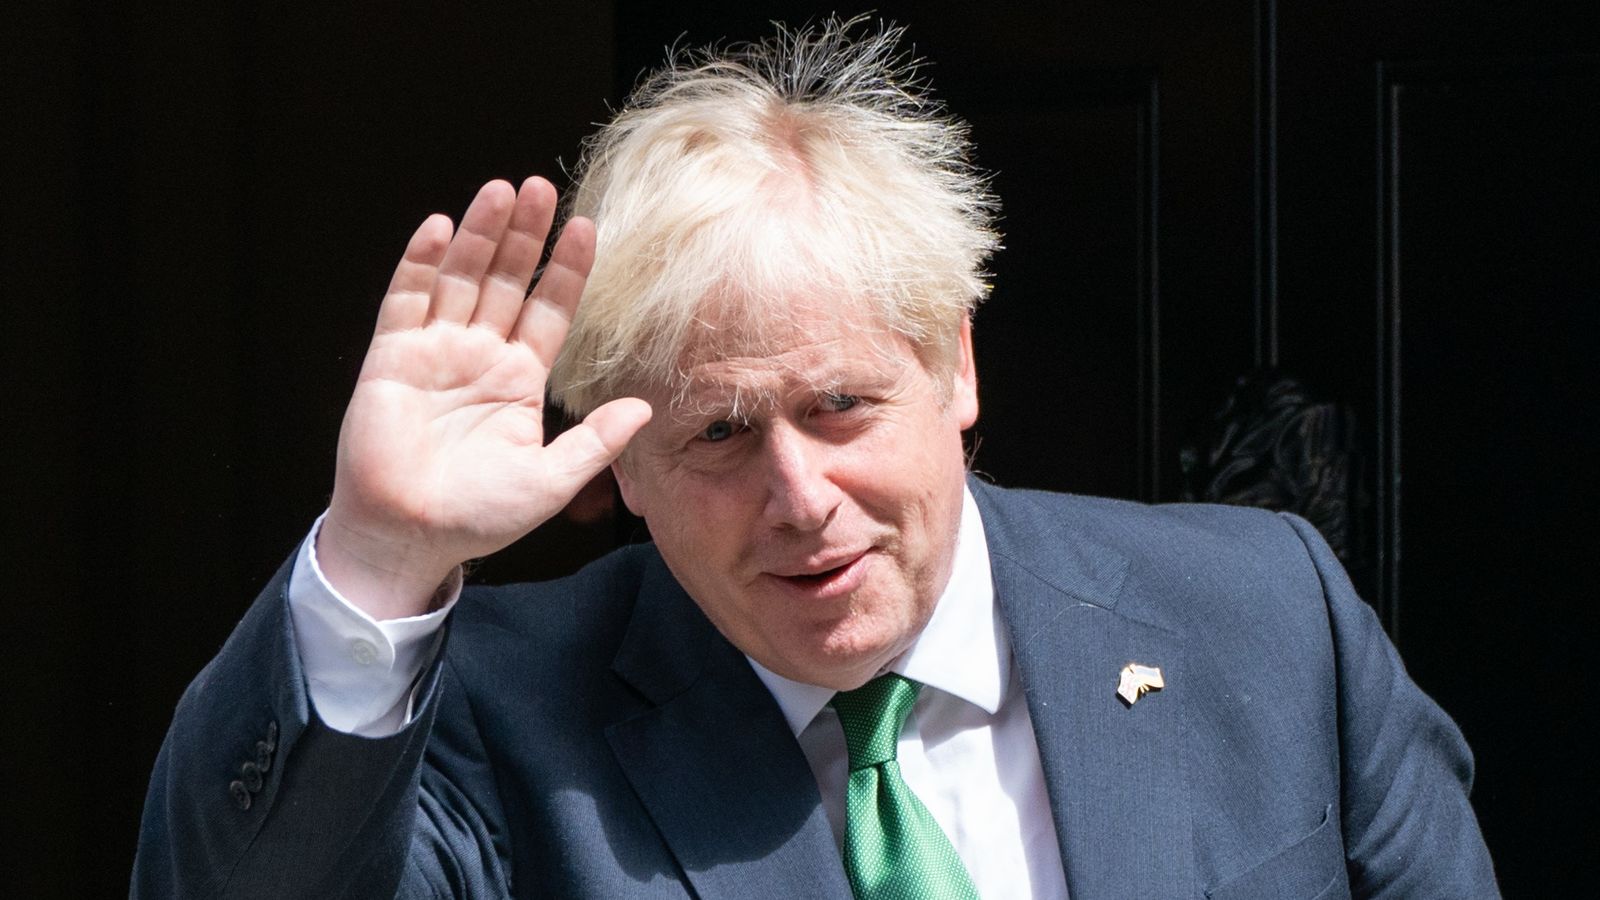 'Let the bodies pile high': Boris Johnson did make controversial remark despite ex-PM's denials, veteran aide claims at COVID inquiry